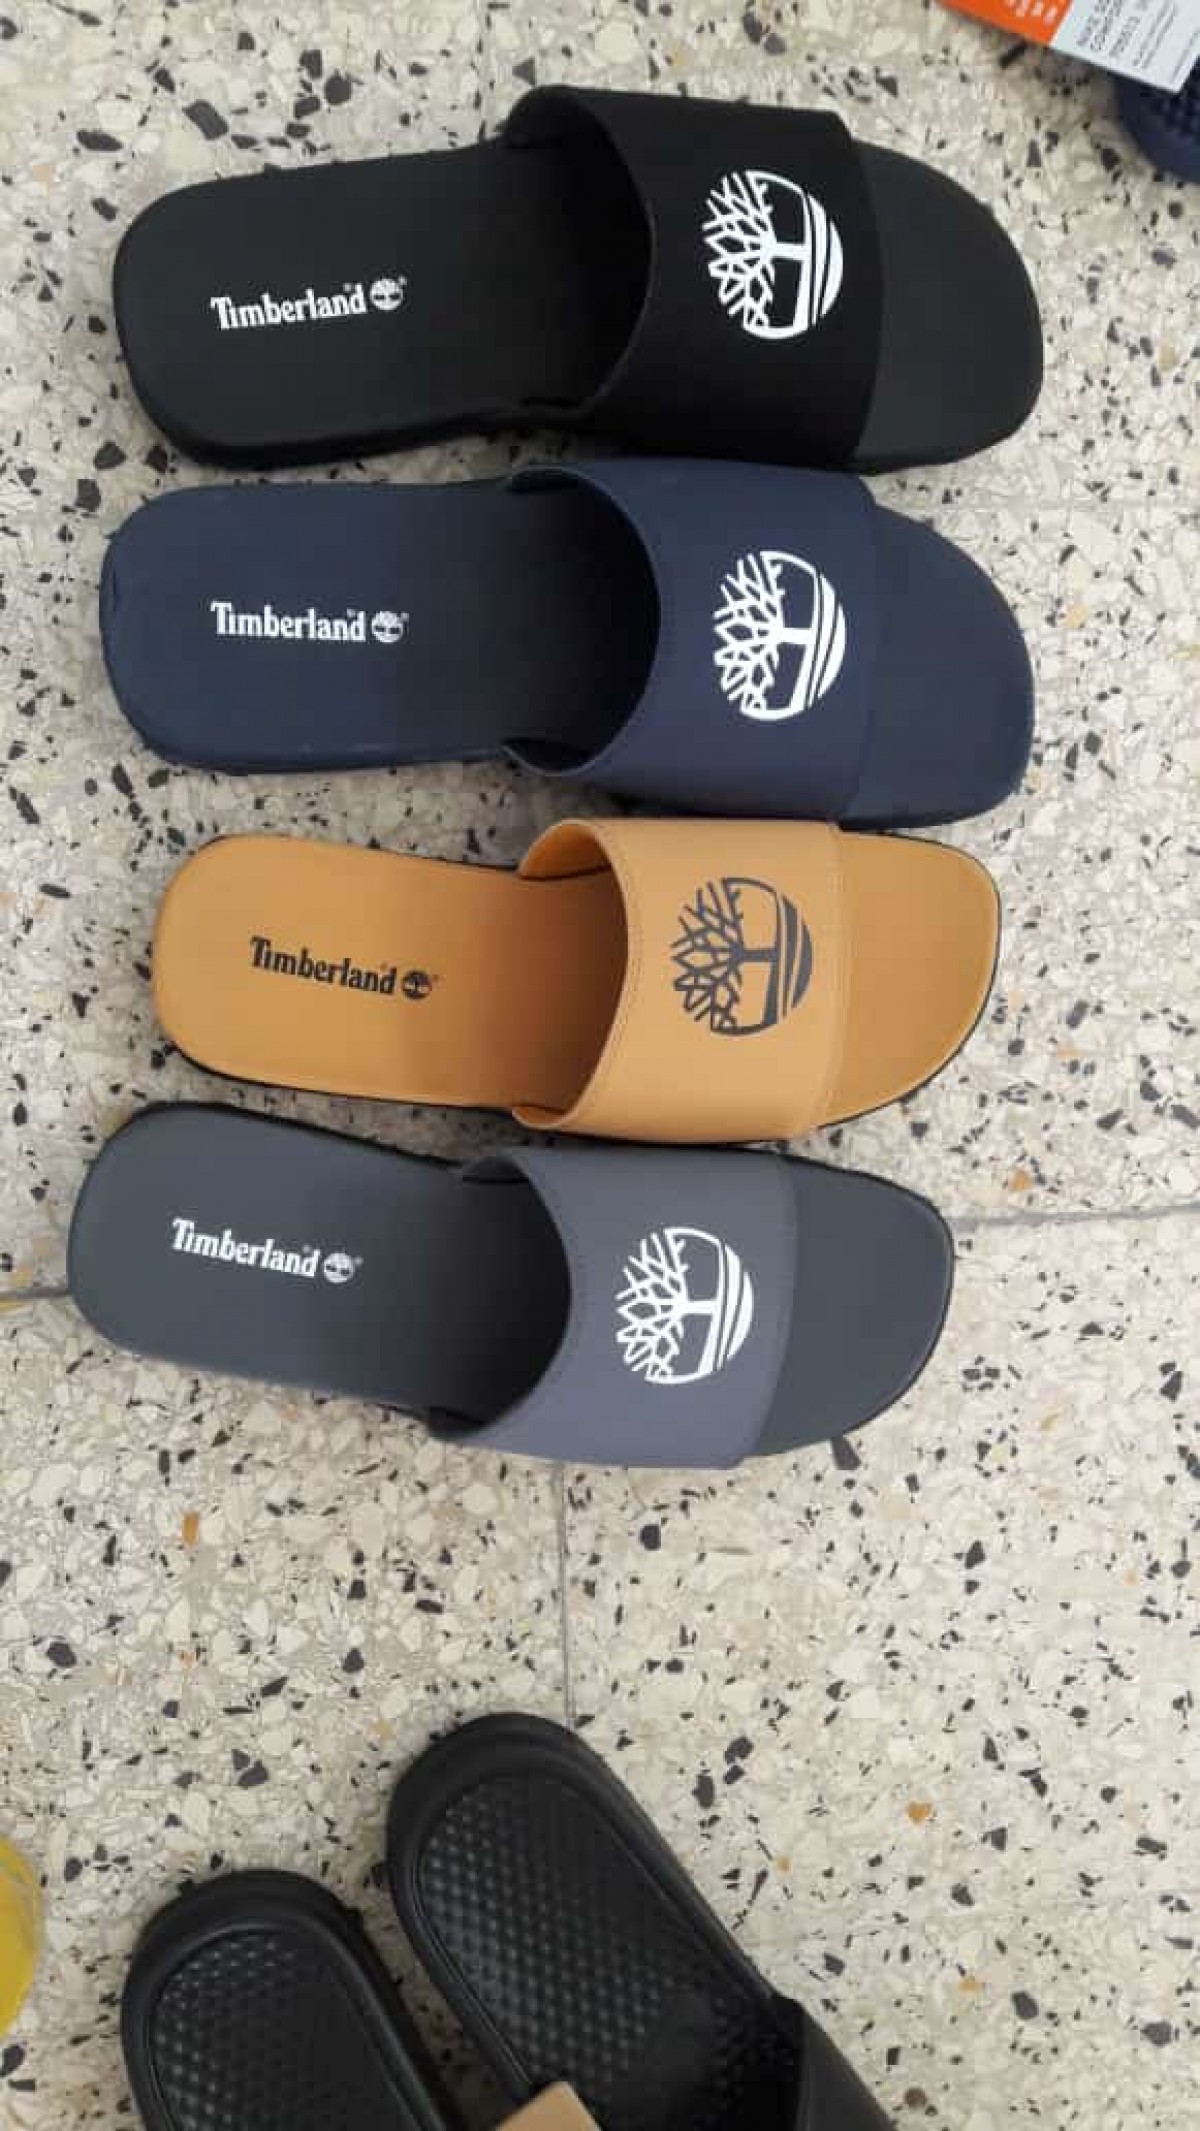 name brand slippers